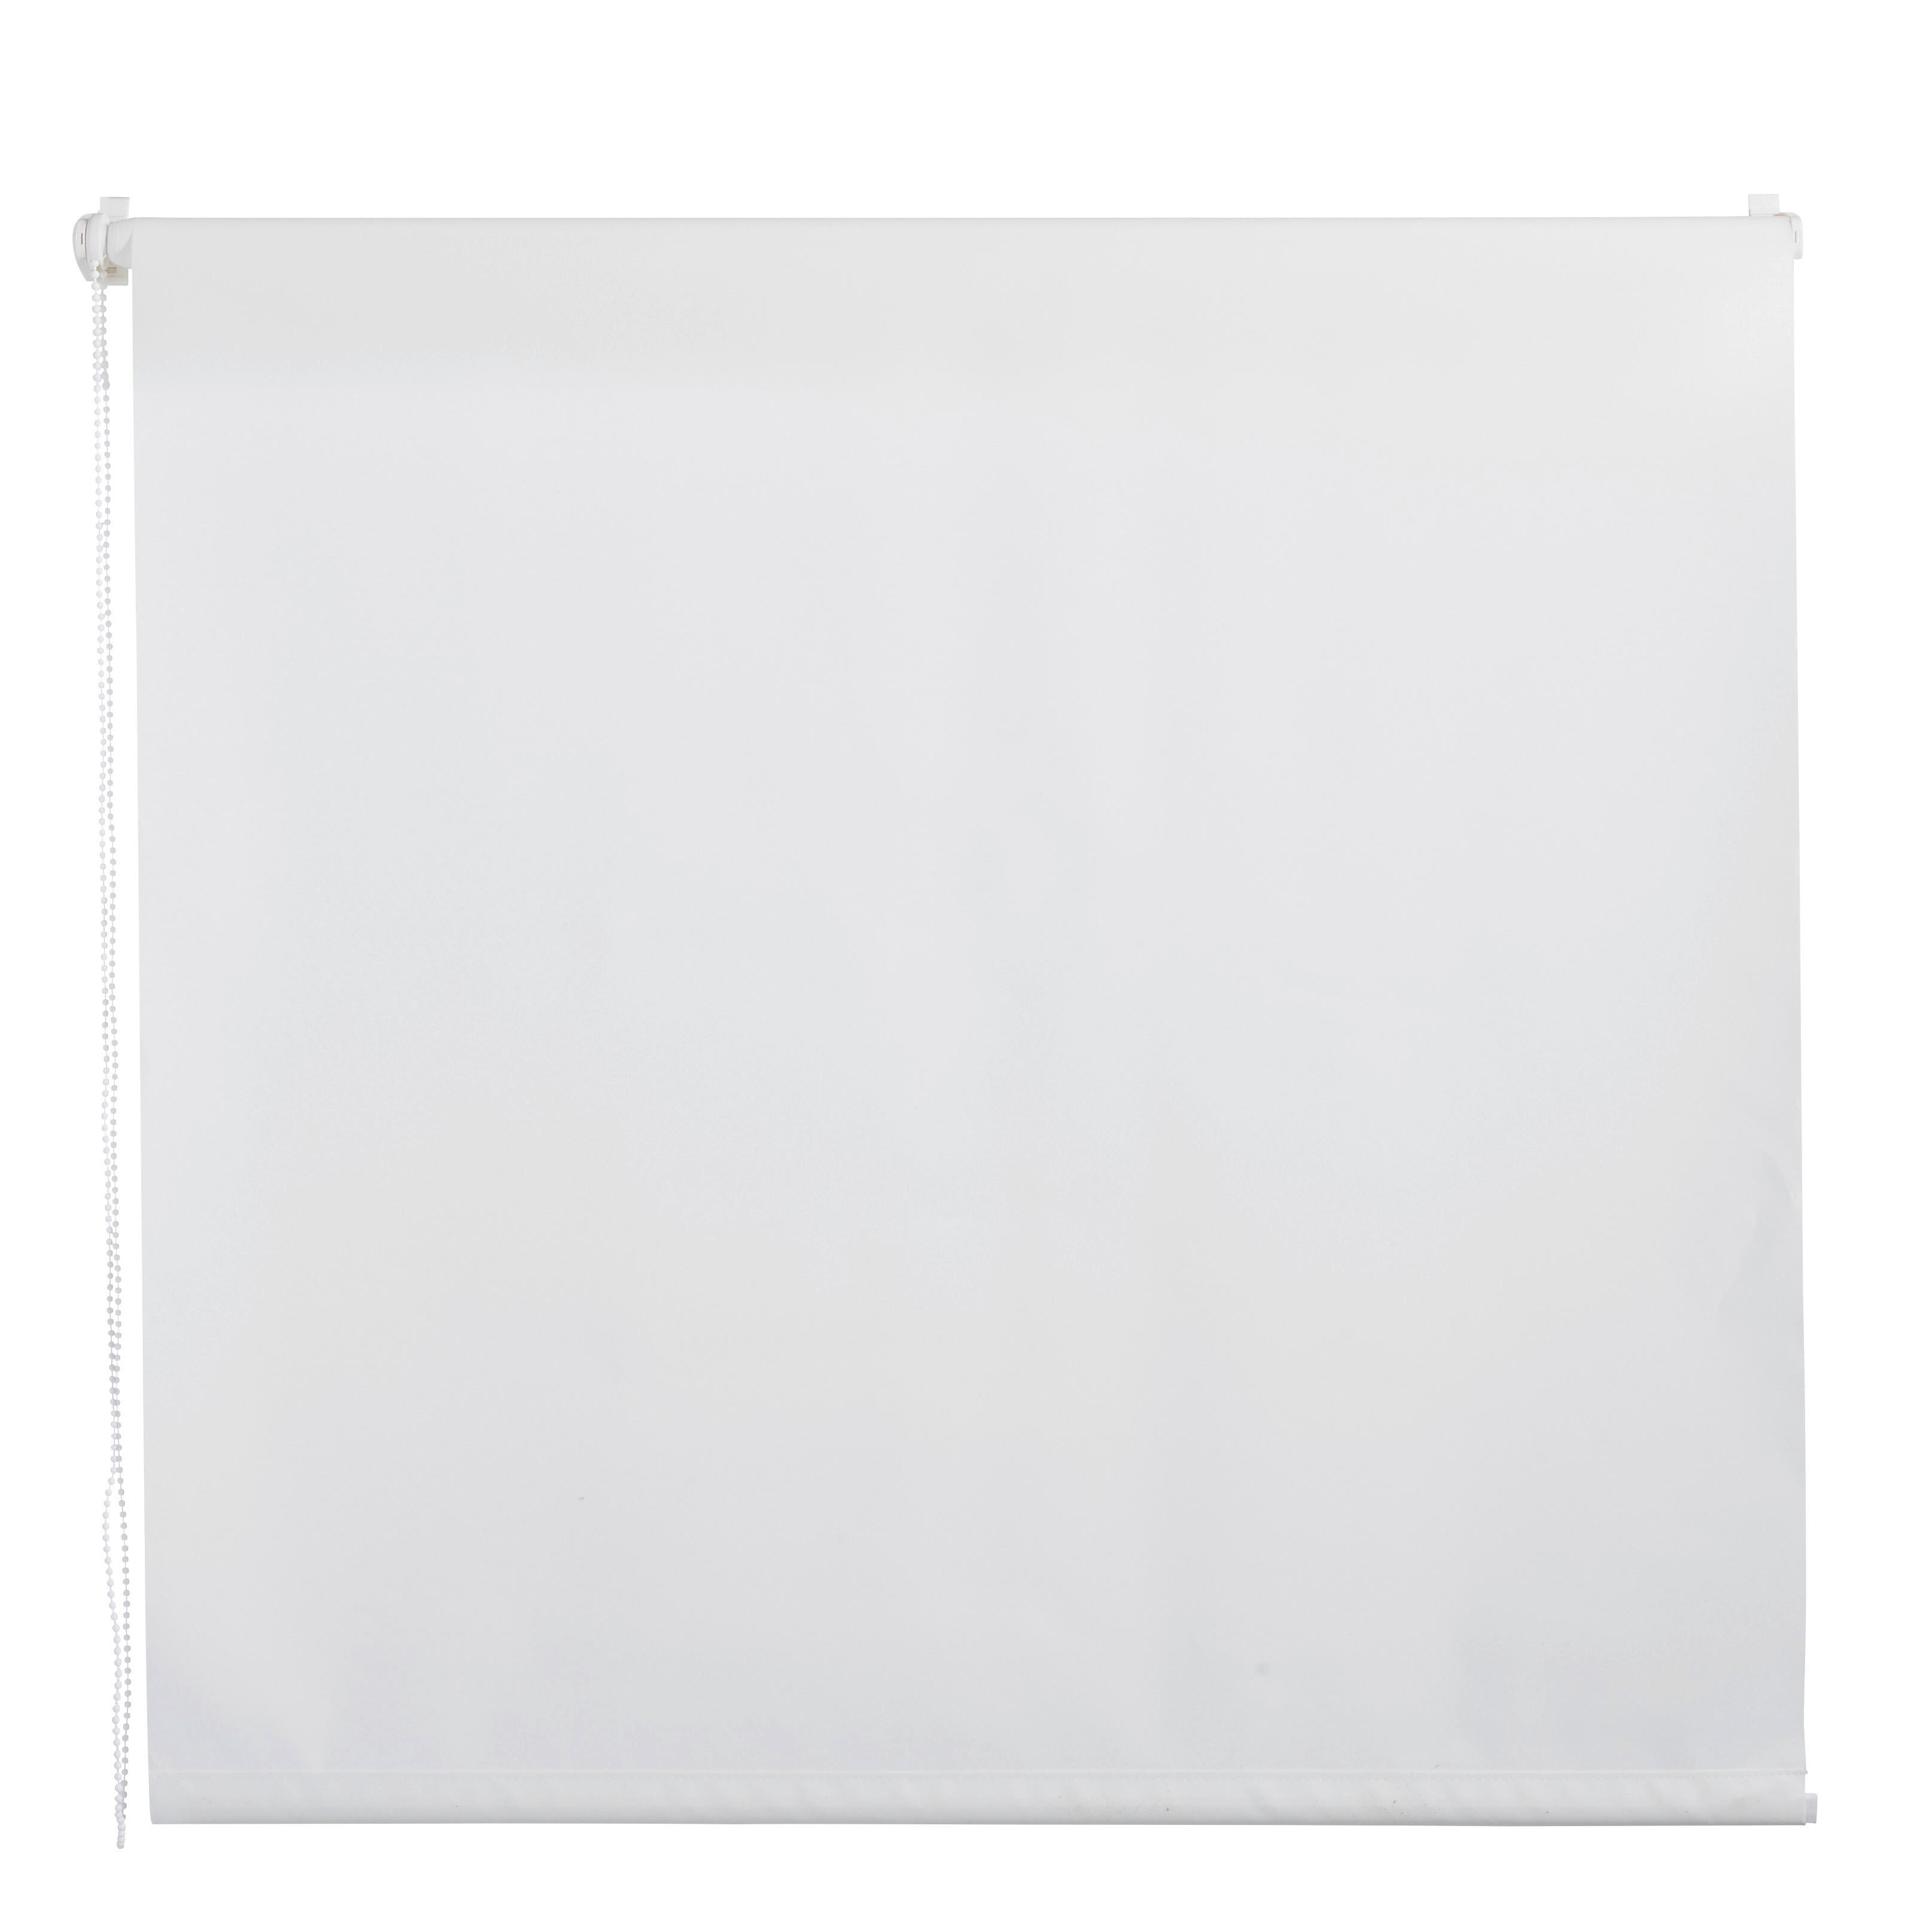 ROLLO  halbtransparent  90/210 cm    - Weiß, Design, Textil (90/210cm) - Homeware